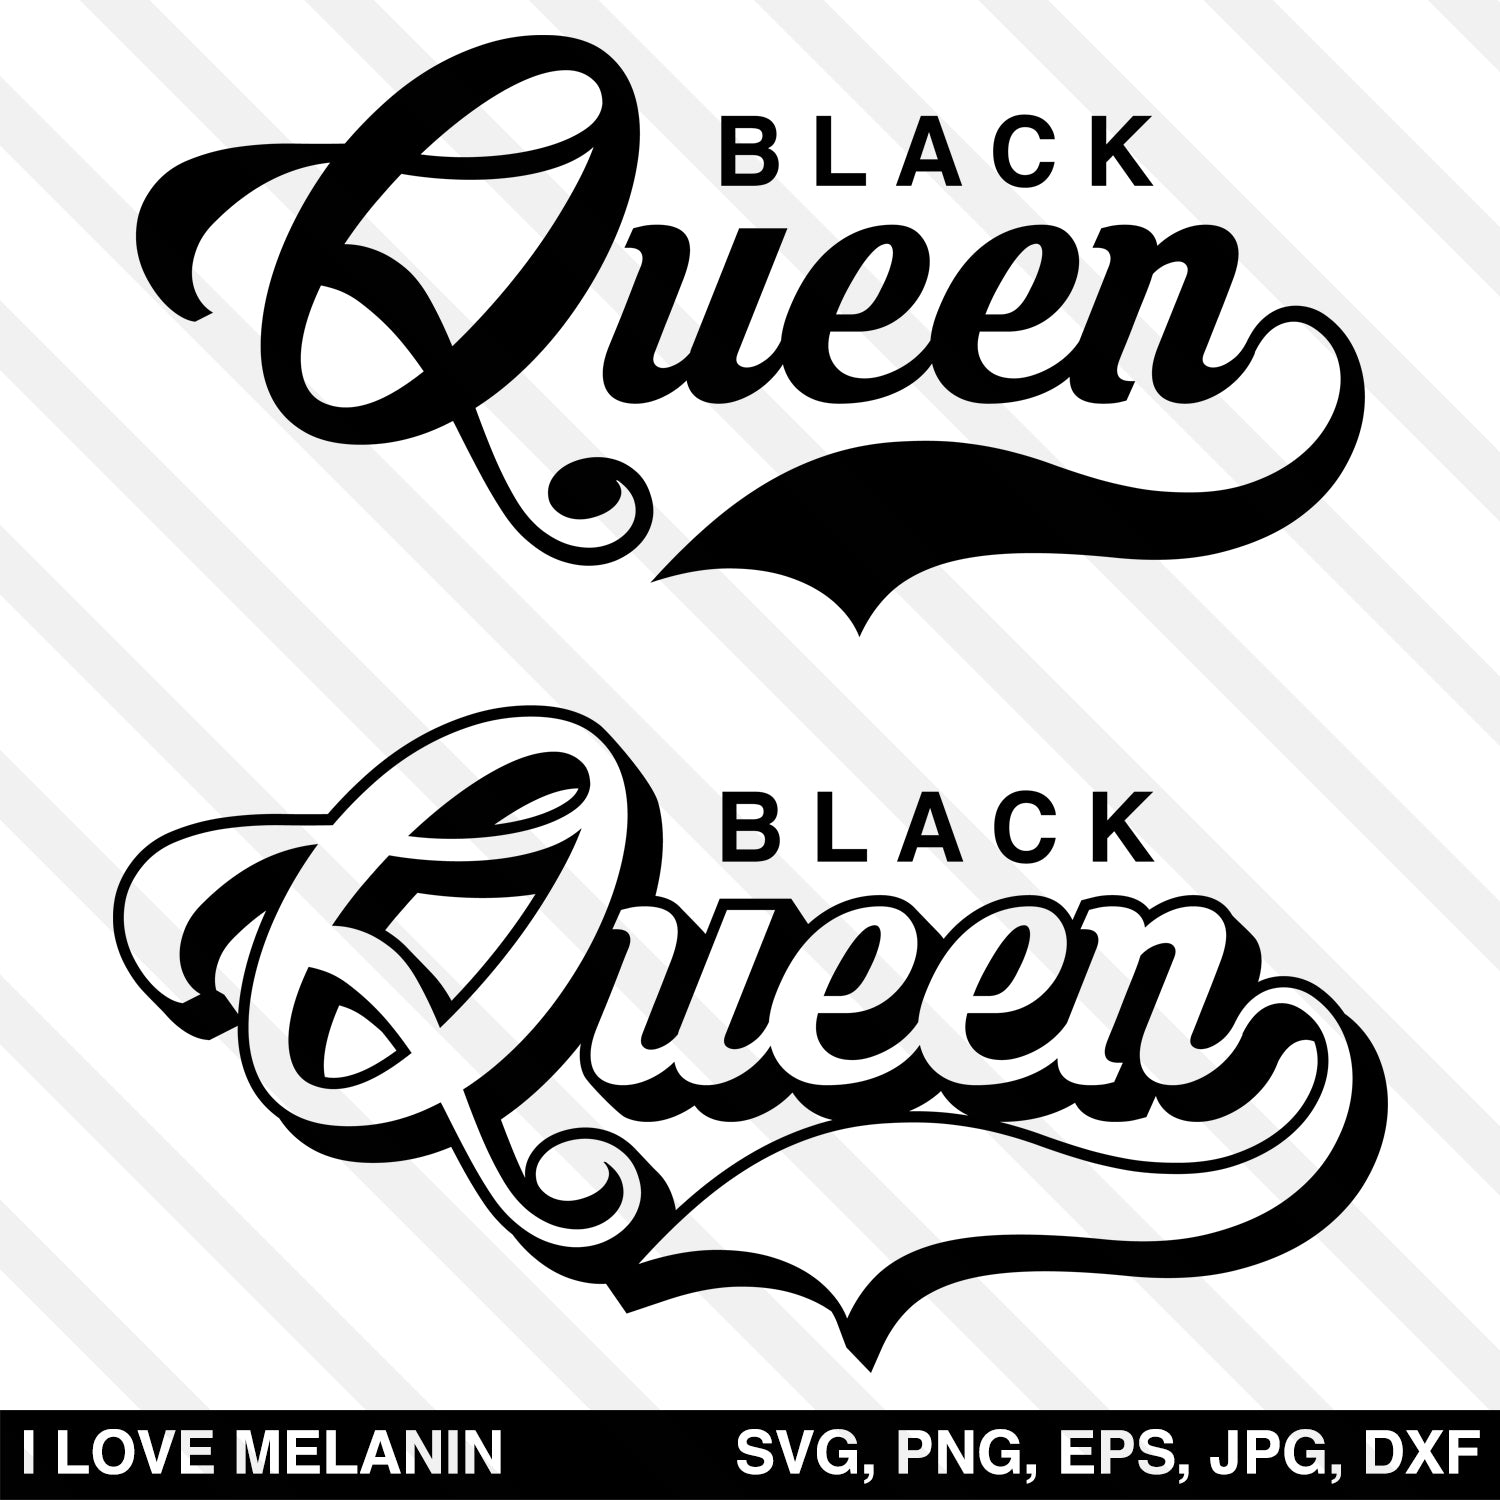 Download Black Queen SVG - I Love Melanin